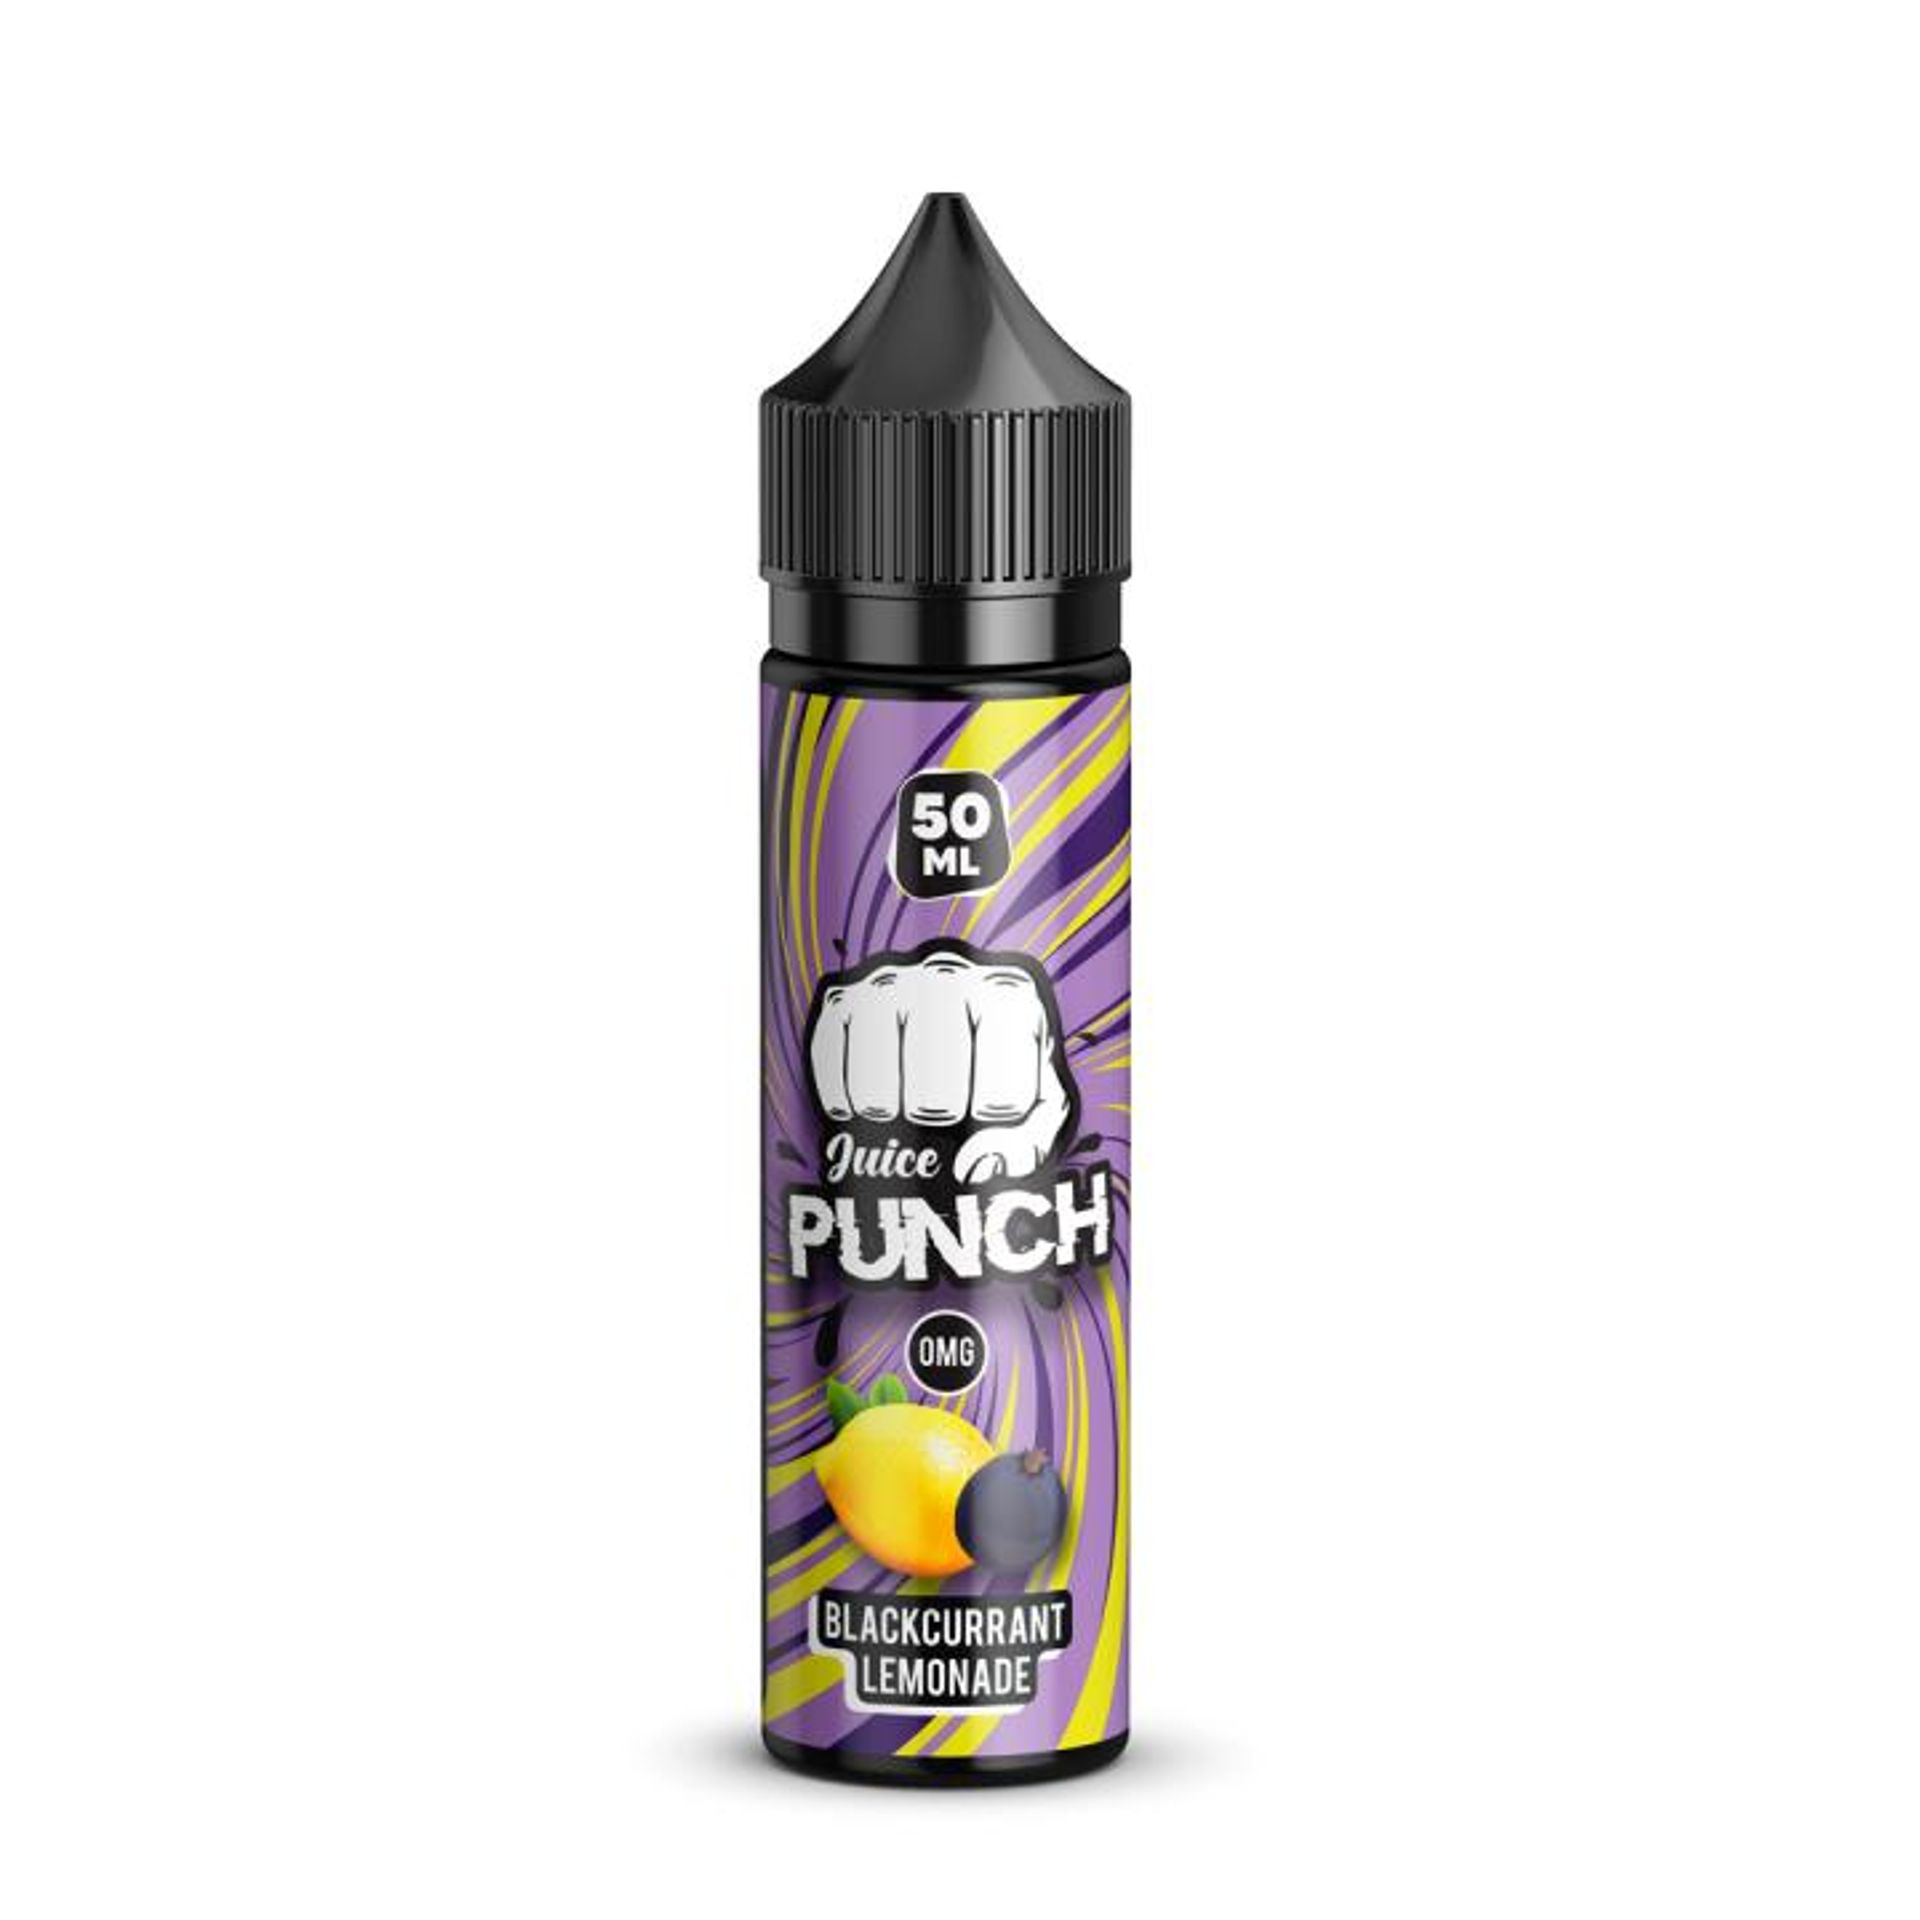 Image of Blackcurrant Lemonade by Juice Punch